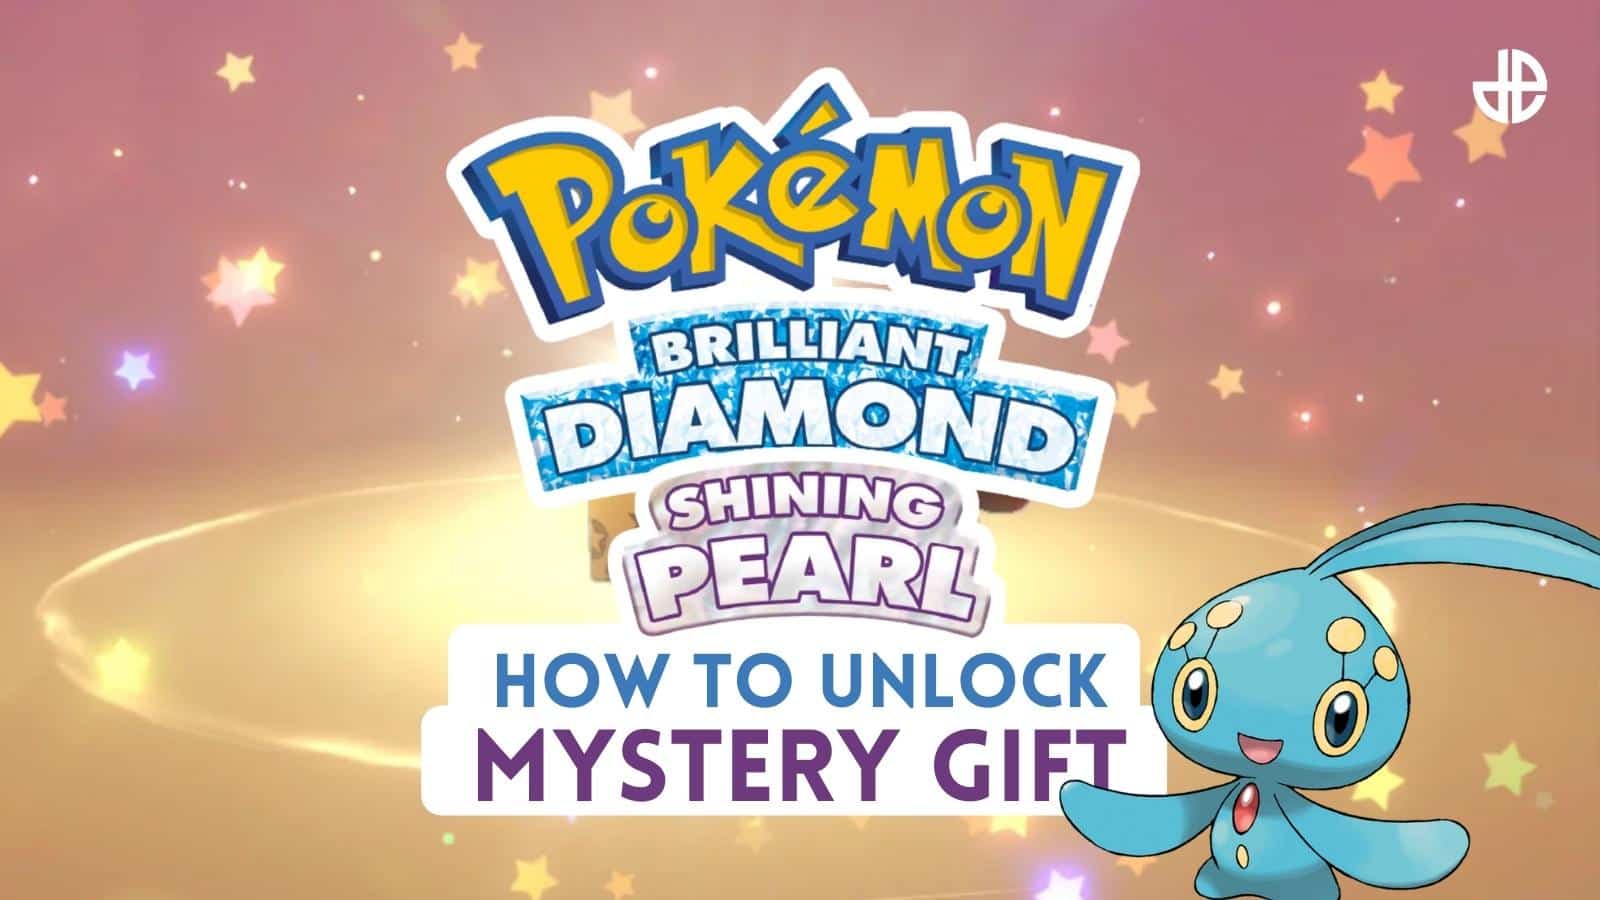 Pokémon Brilliant Diamond and Shining Pearl: How To Unlock the